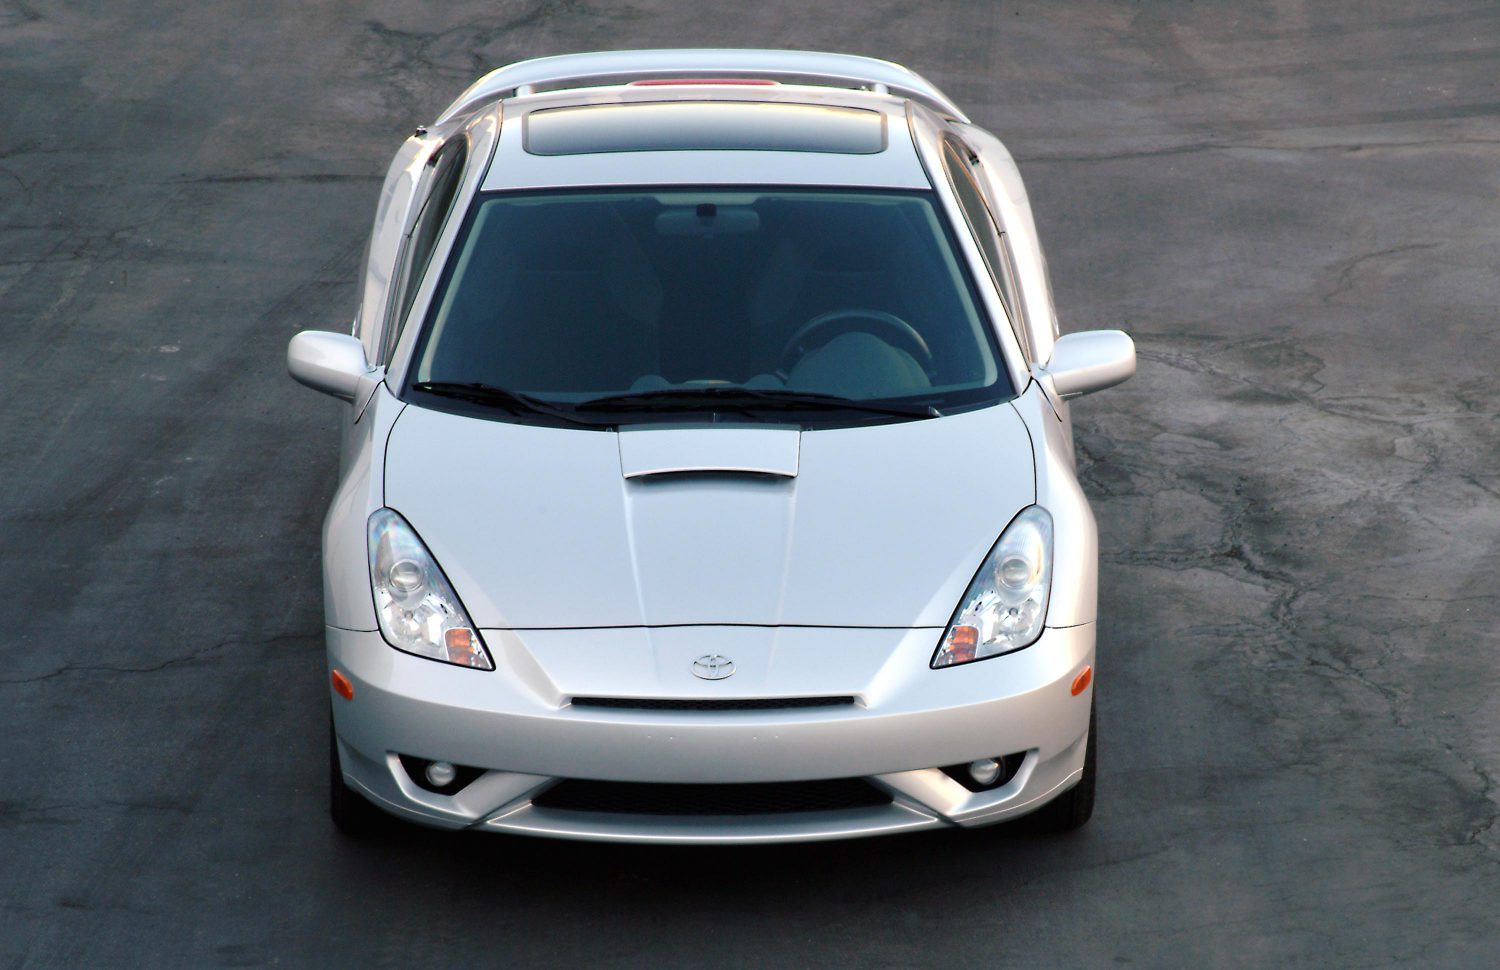 2003 - 2005 Toyota Celica GT-S 003 - Toyota USA Newsroom